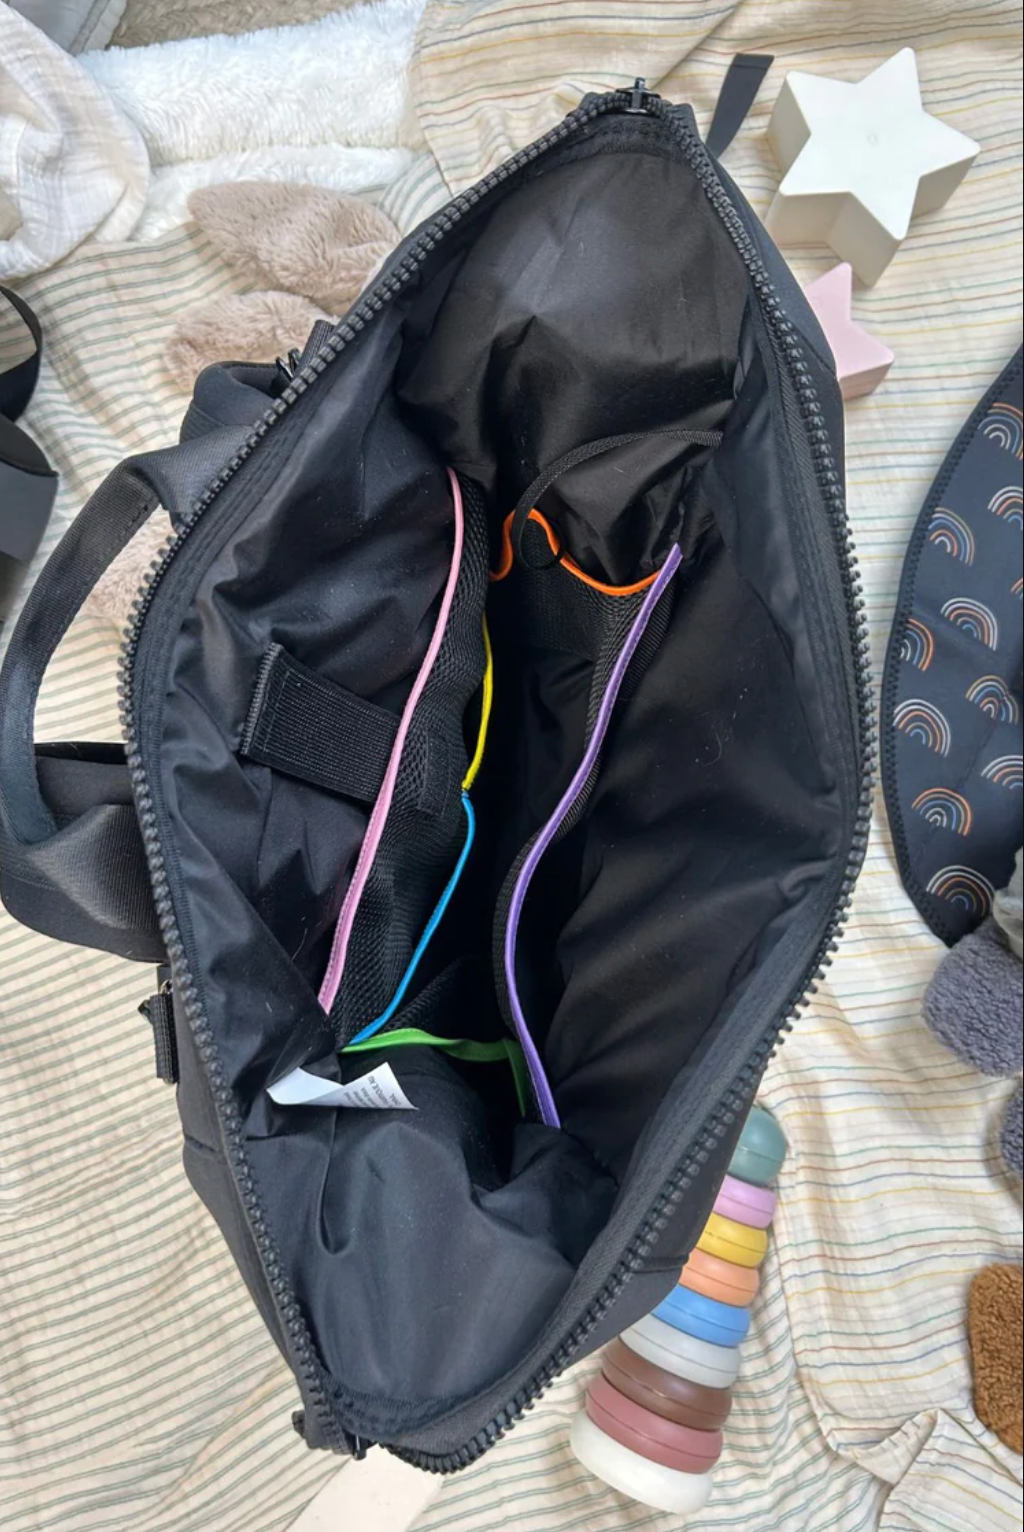 Black Diaper Backpack